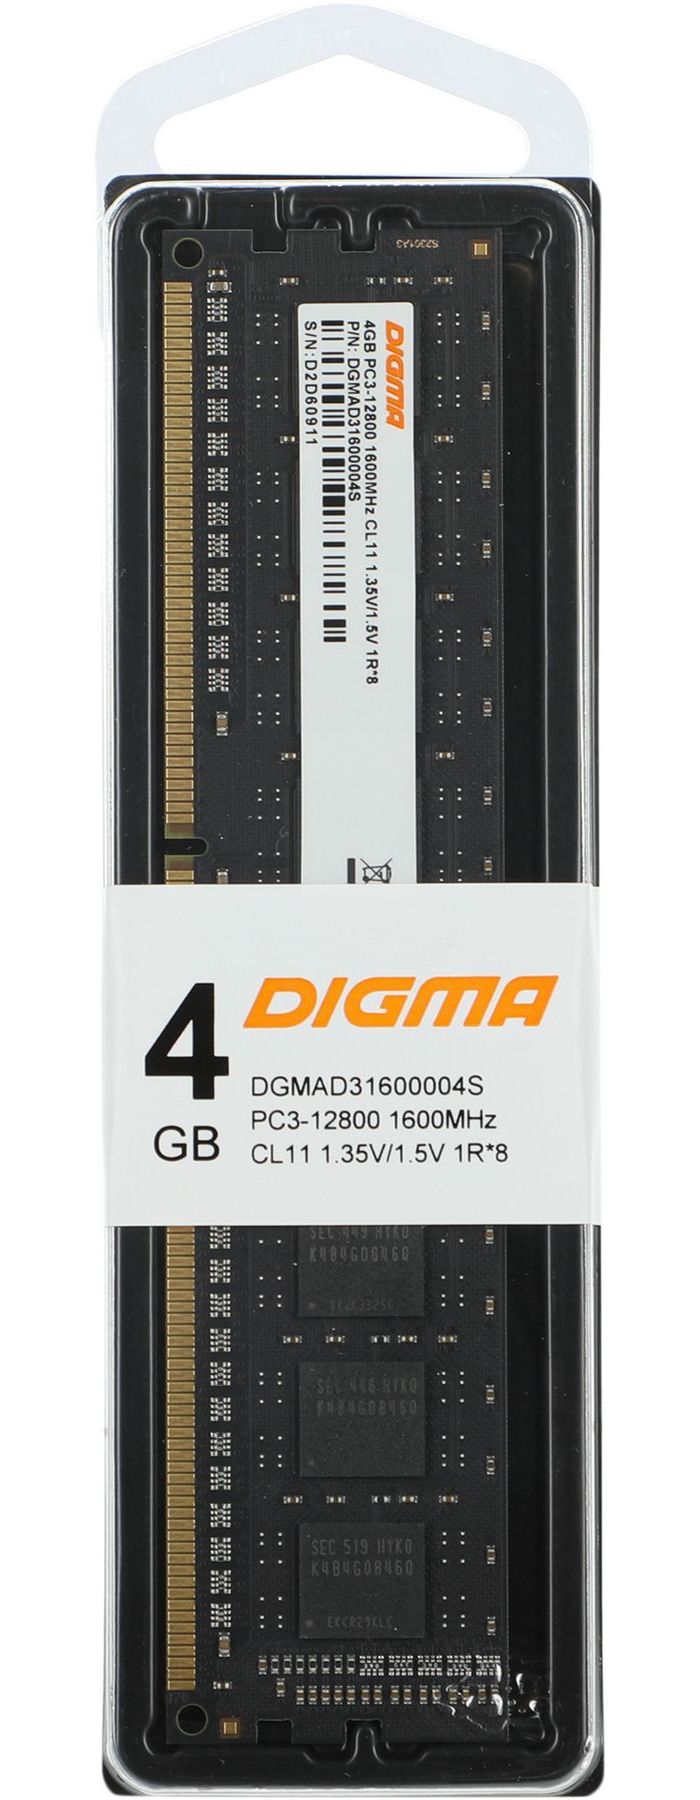 Оперативная память DDR3L Digma 4Gb 1600MHz DIMM (DGMAD31600004S) память оперативная ddr3 digma 4gb 1600mhz dgmad31600004d